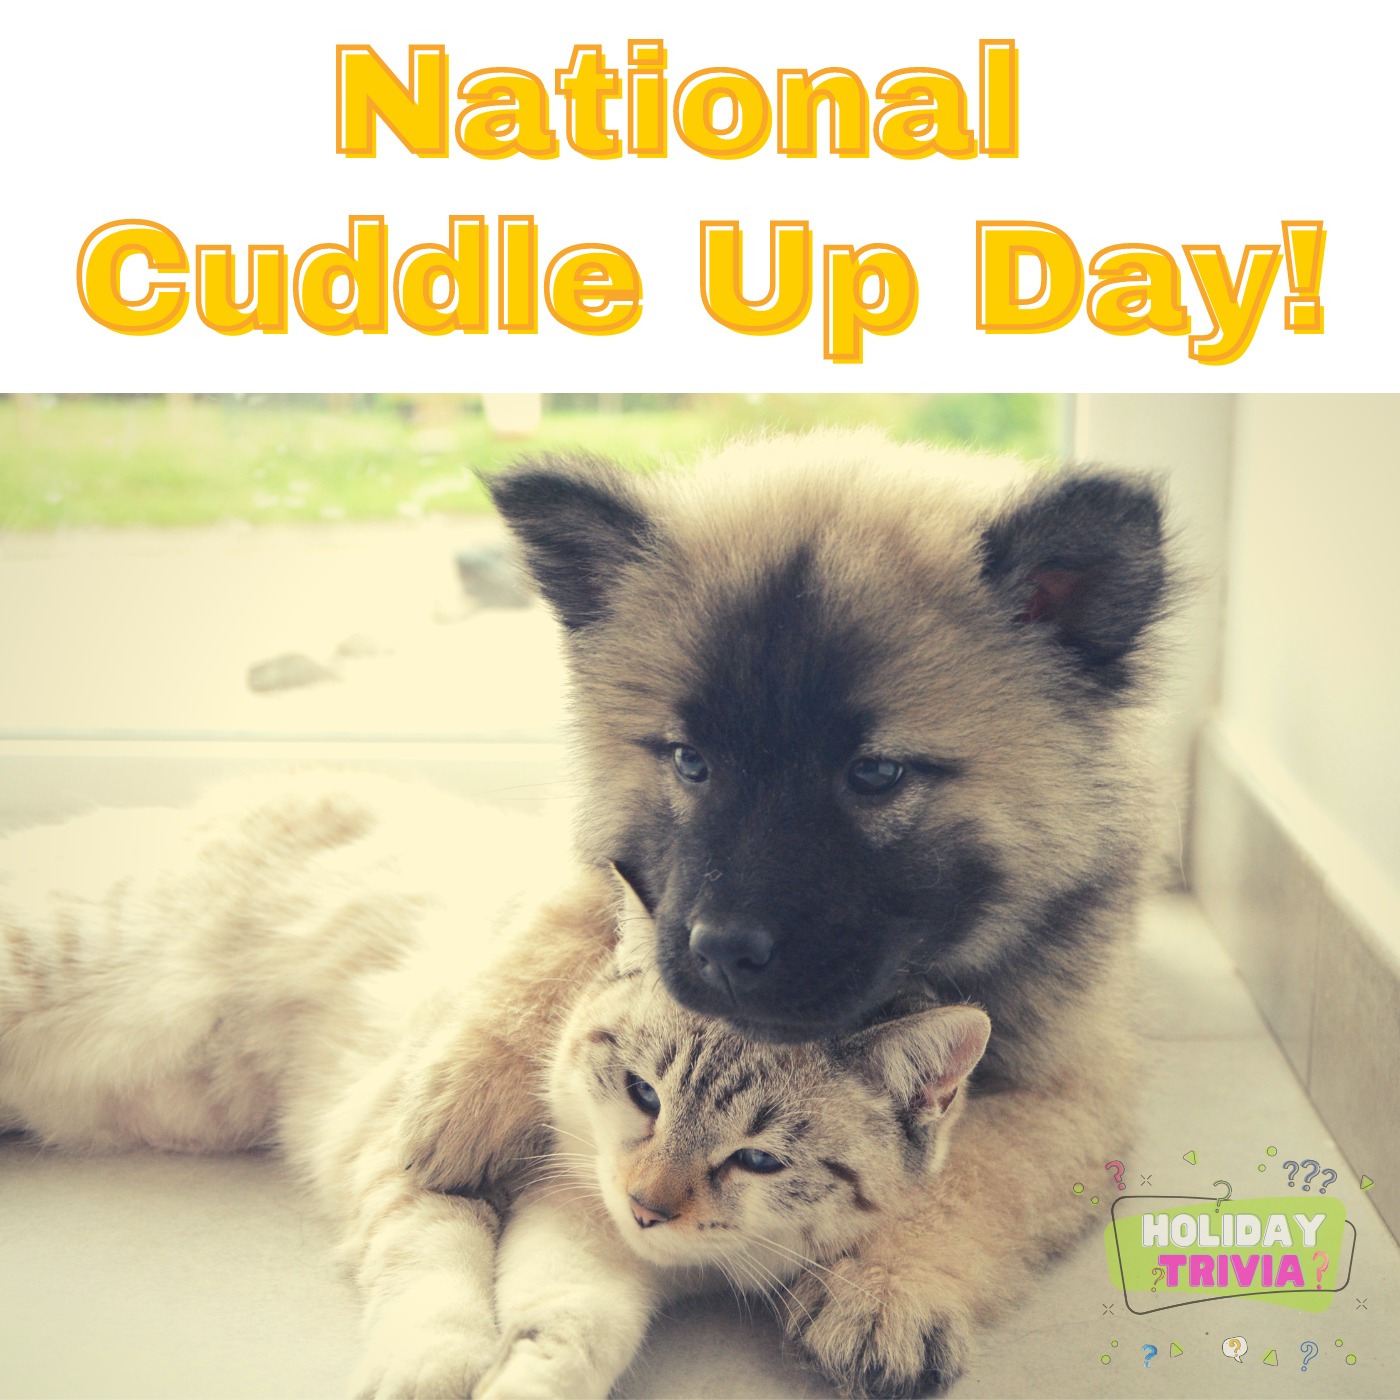 Episode #058 National Cuddle Up Day! Image